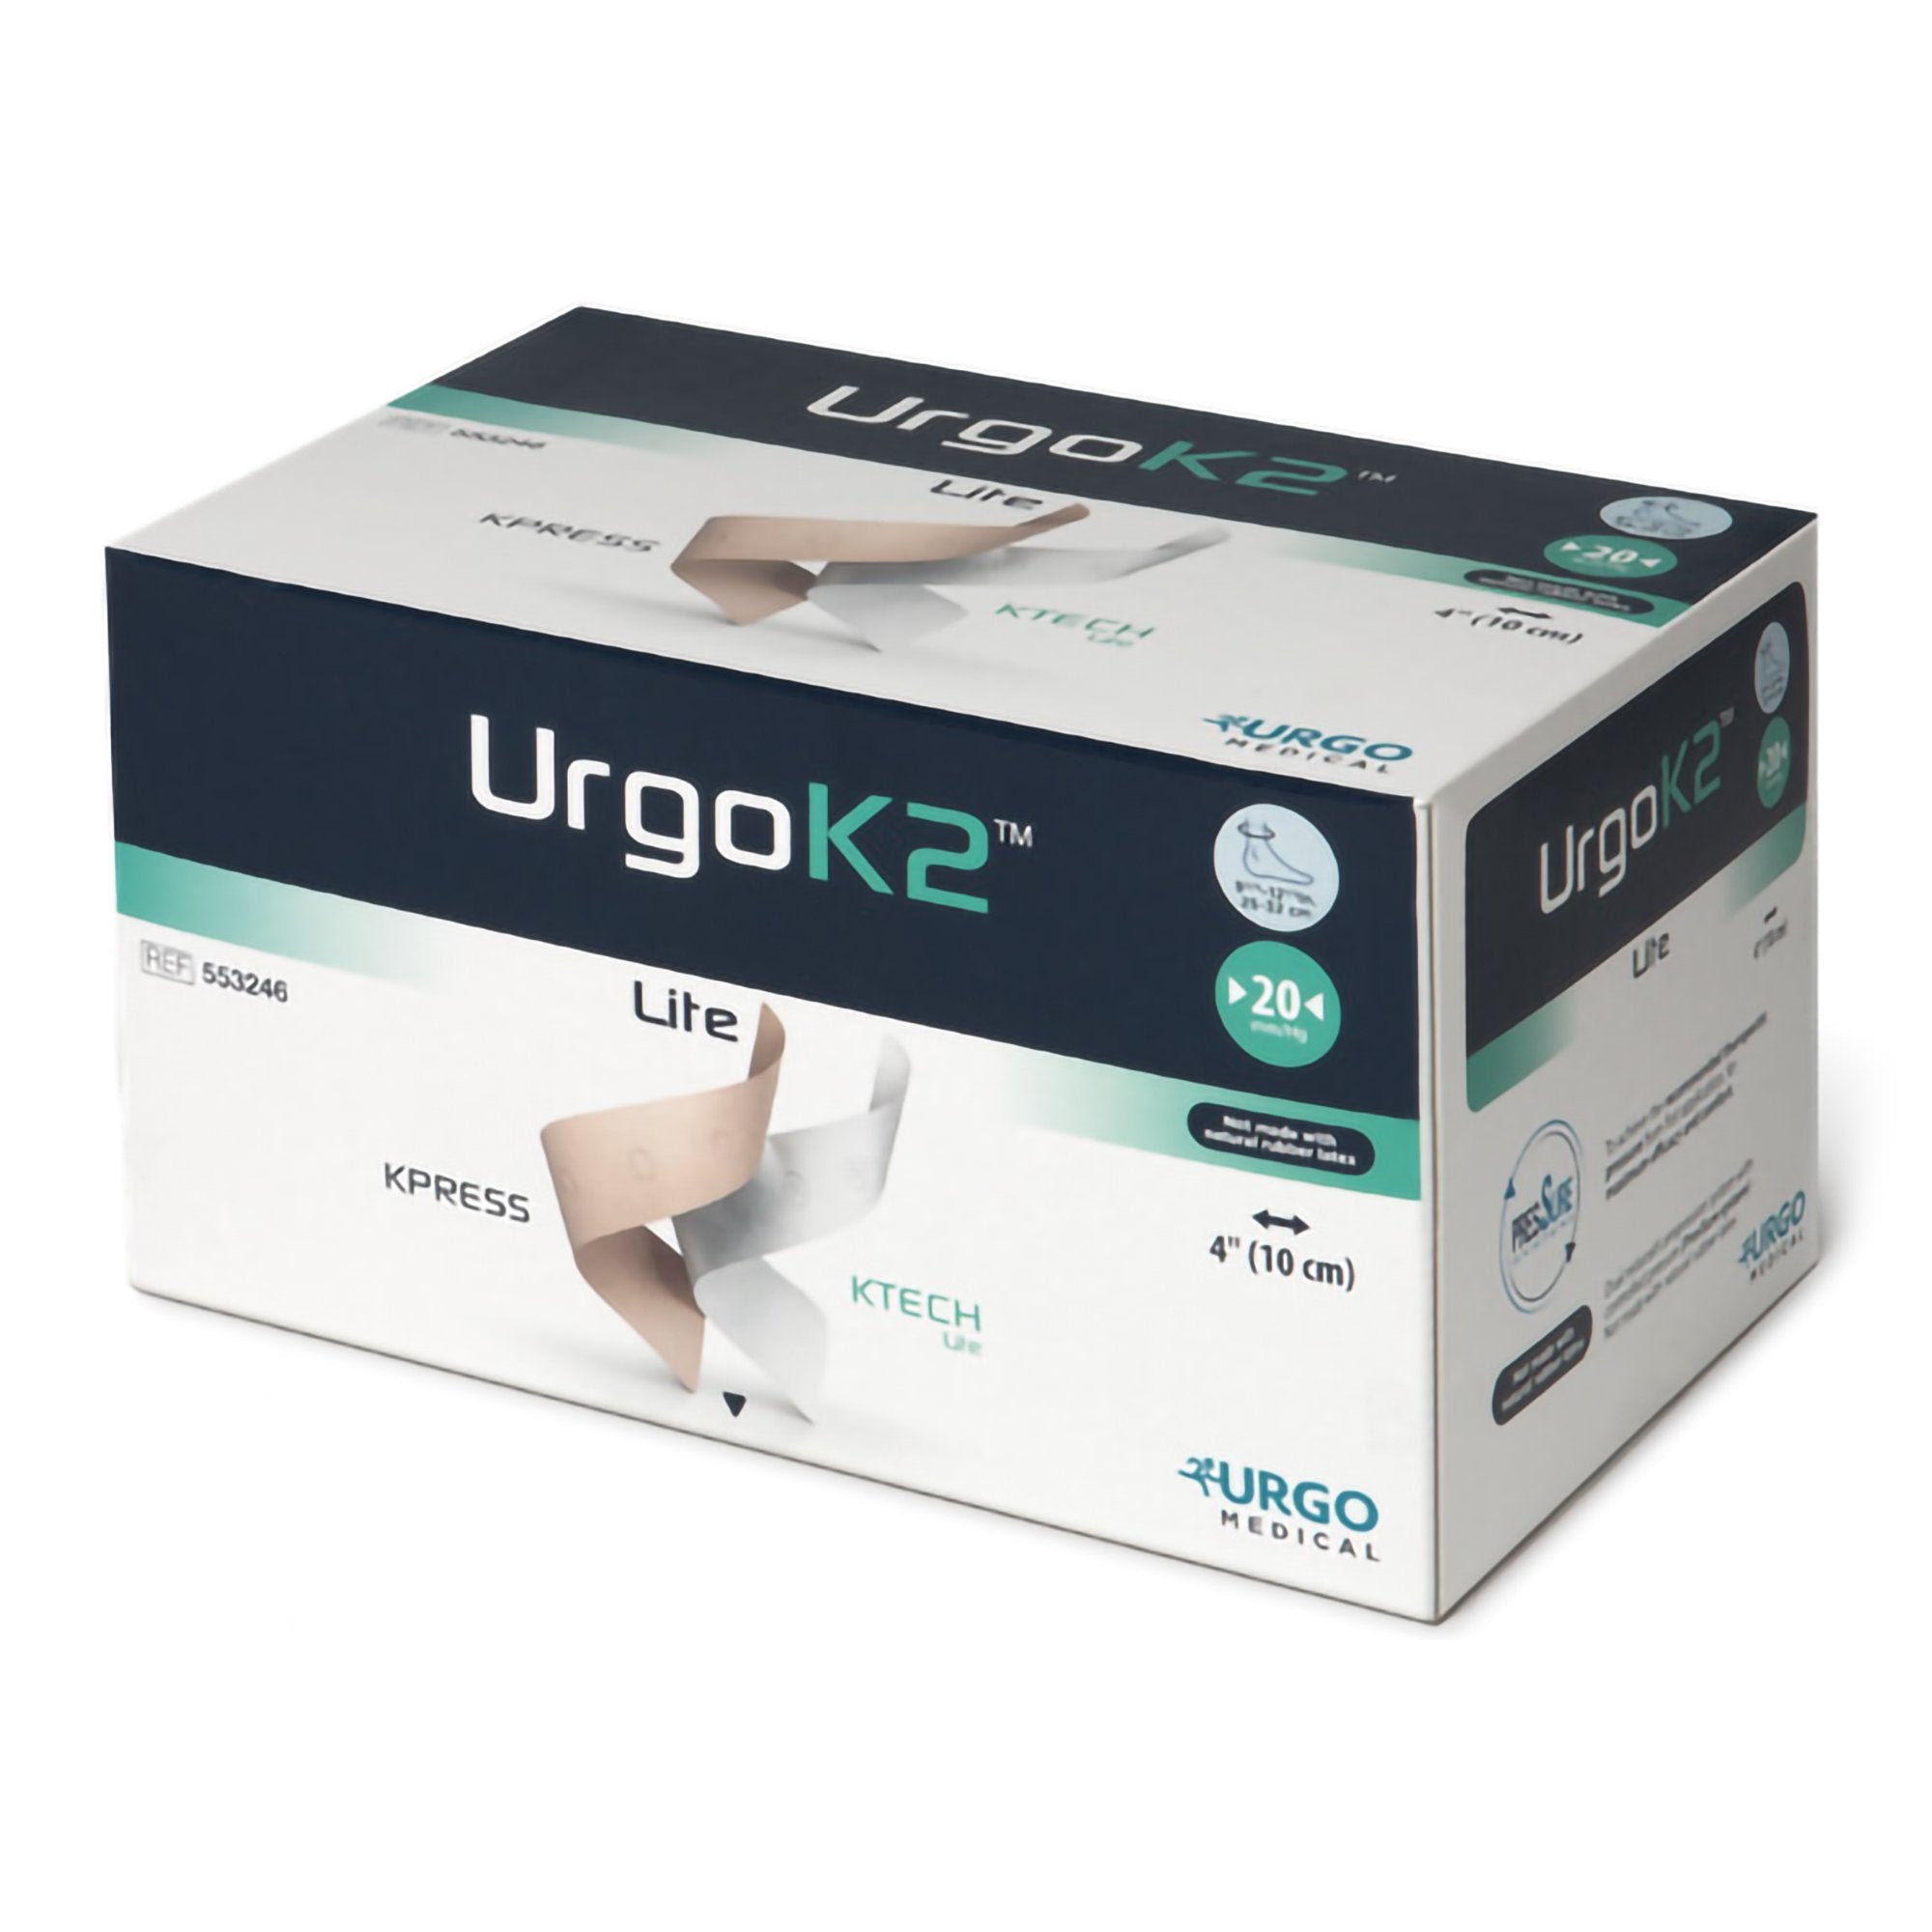 2 Layer Compression Bandage System URGOK2™ Lite 4 X 9-3/4 X 12-1/2 Inch Self-Adherent Closure Tan / White / Pink NonSterile Large 20 mmHg